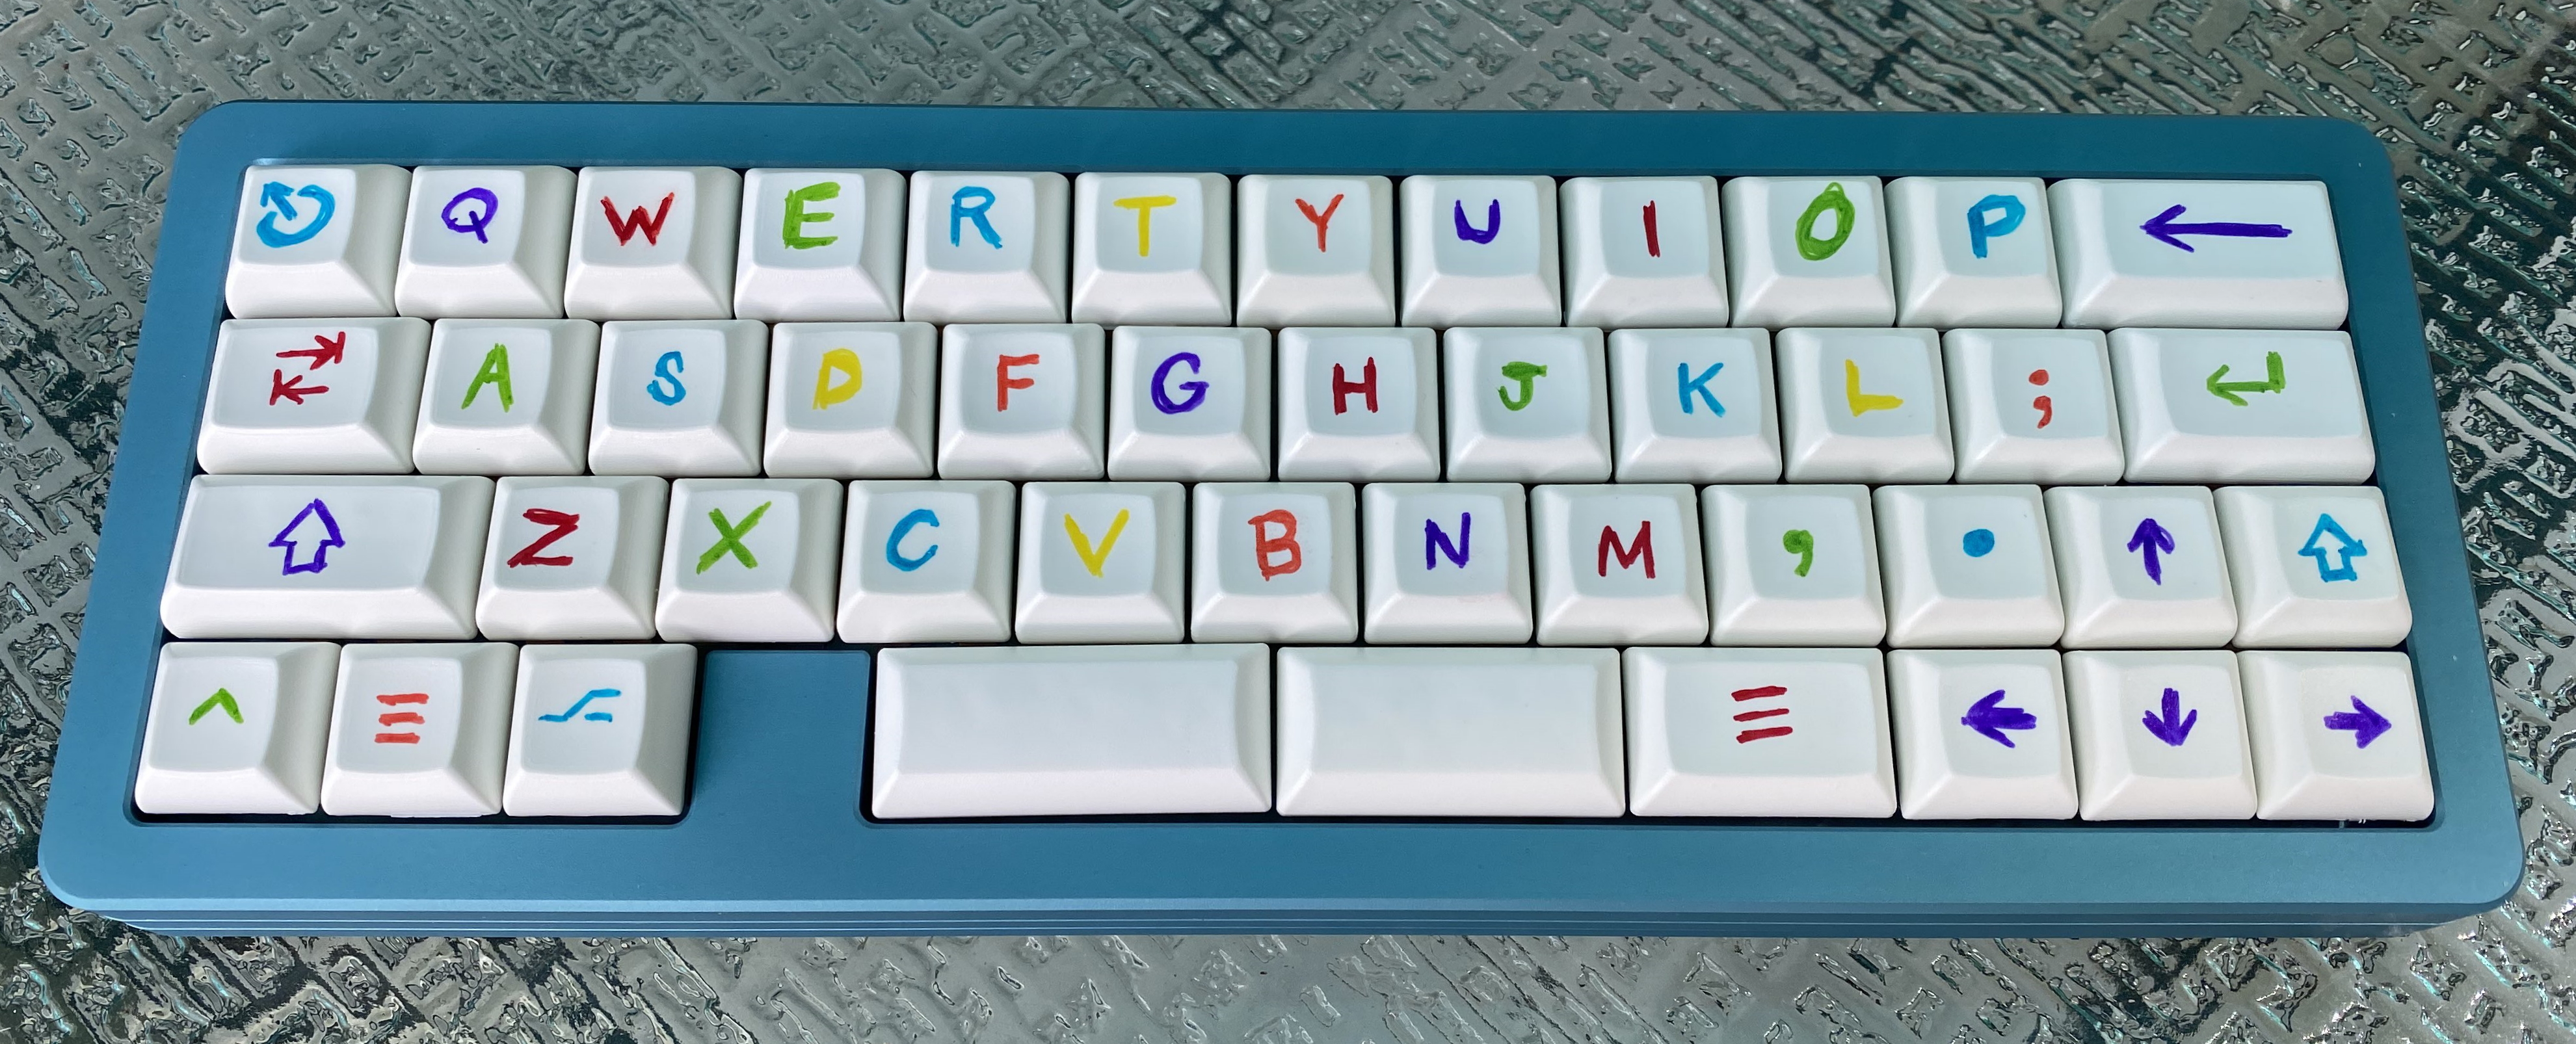 A set of custom dye-sublimated HuB Cool Kids keycaps on an MHKB